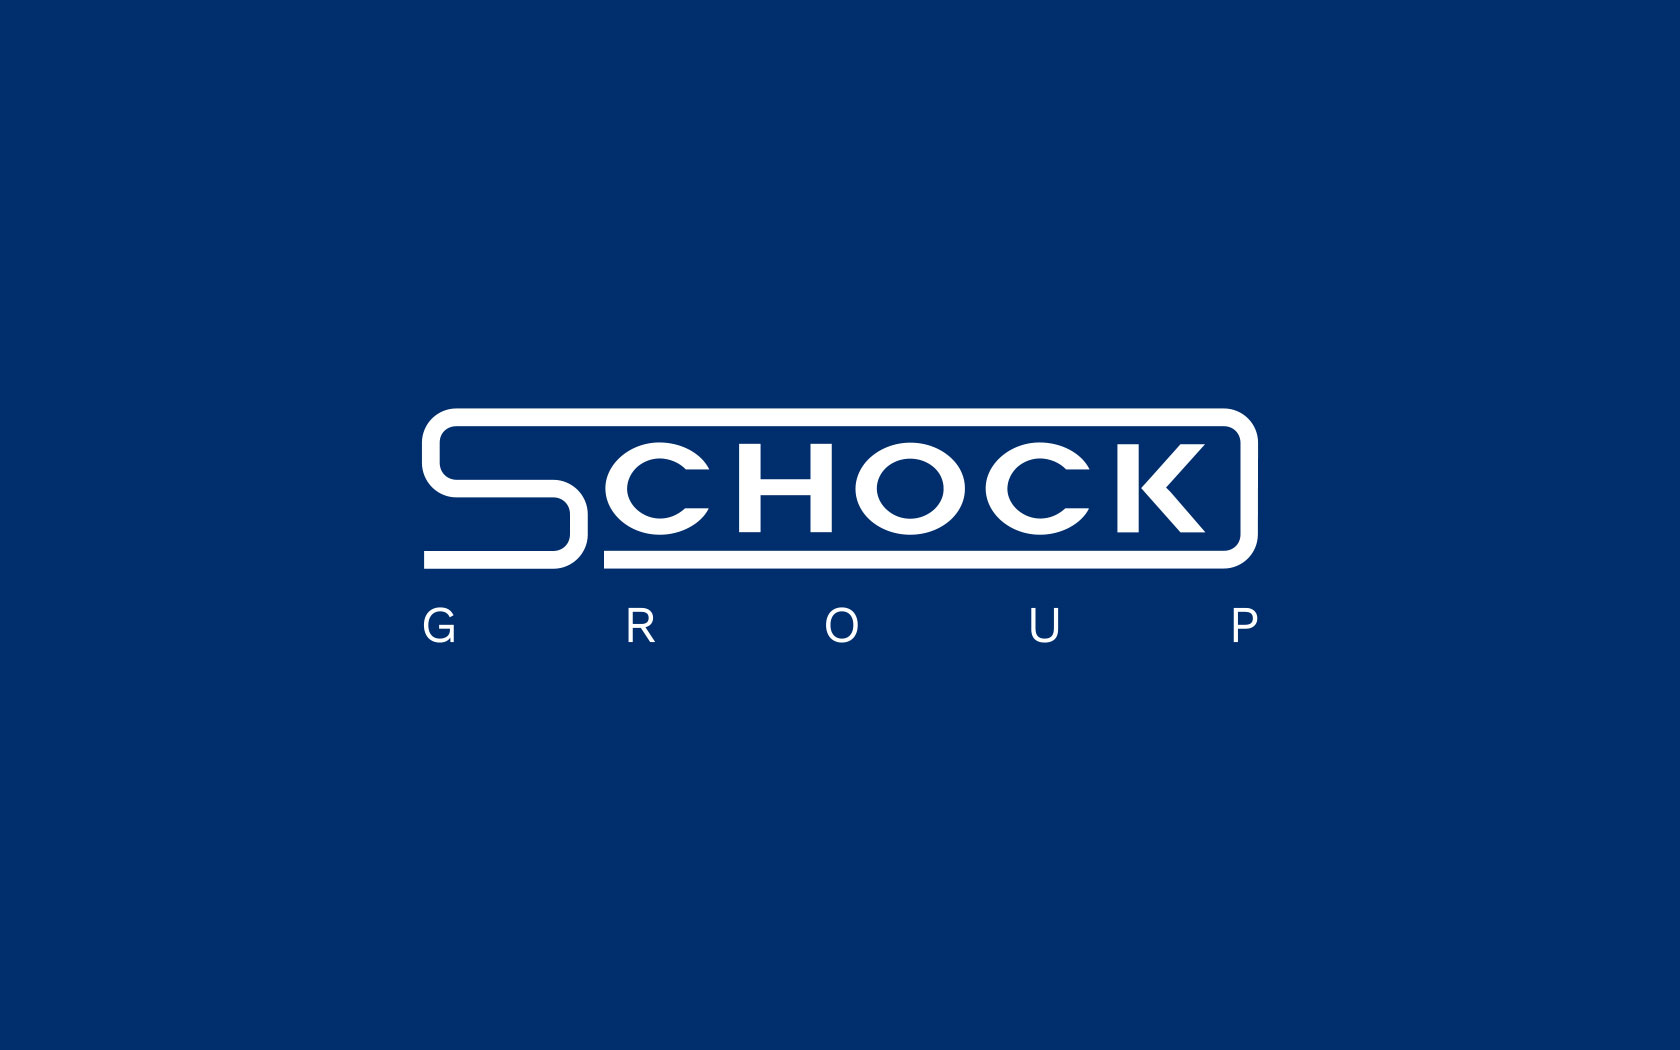 (c) Schock-group.com